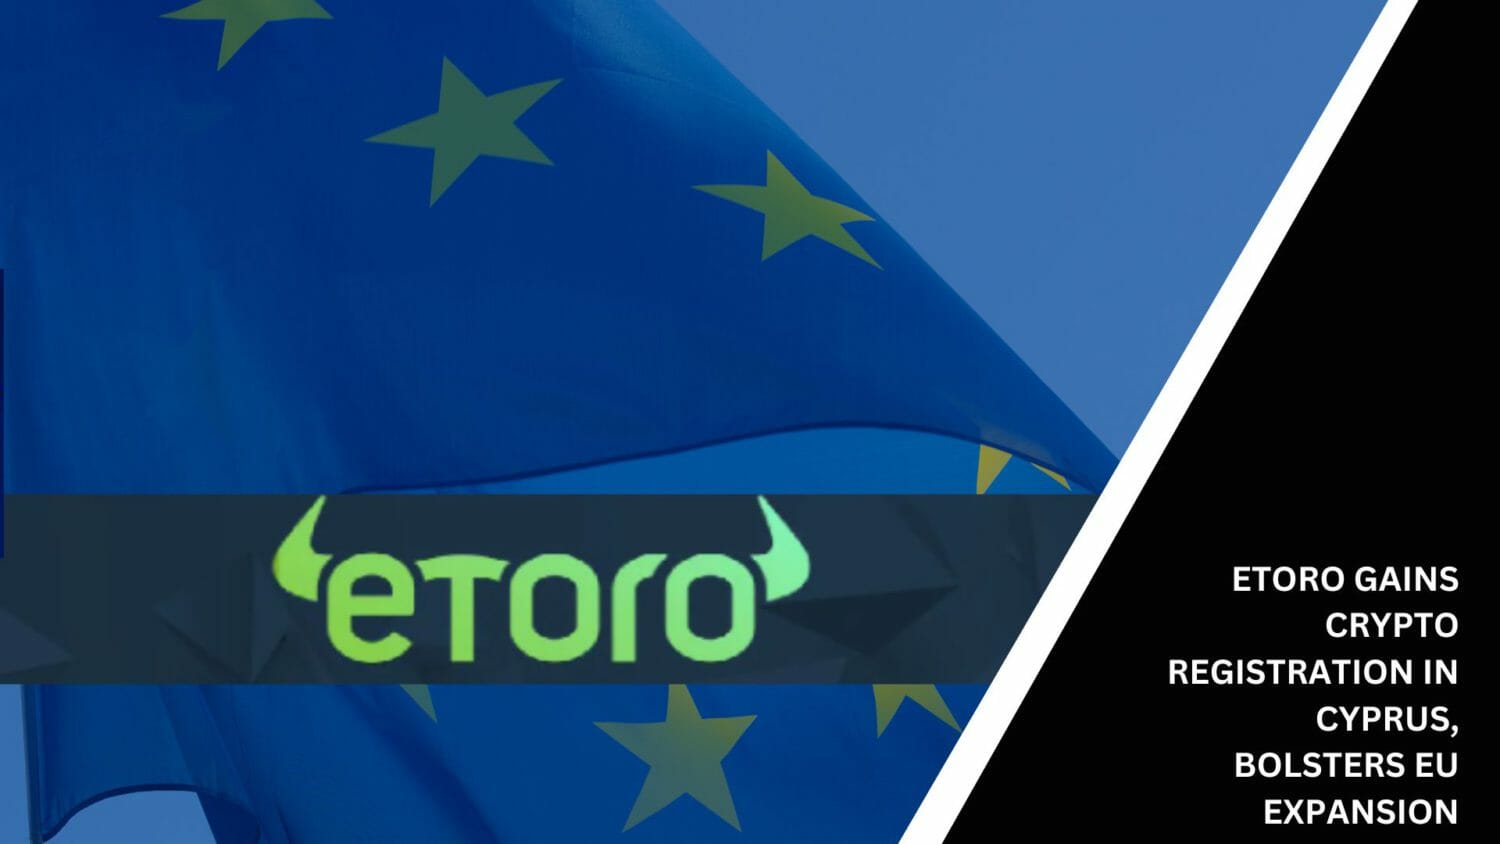 Etoro Gains Crypto Registration In Cyprus, Bolsters Eu Expansion Efforts